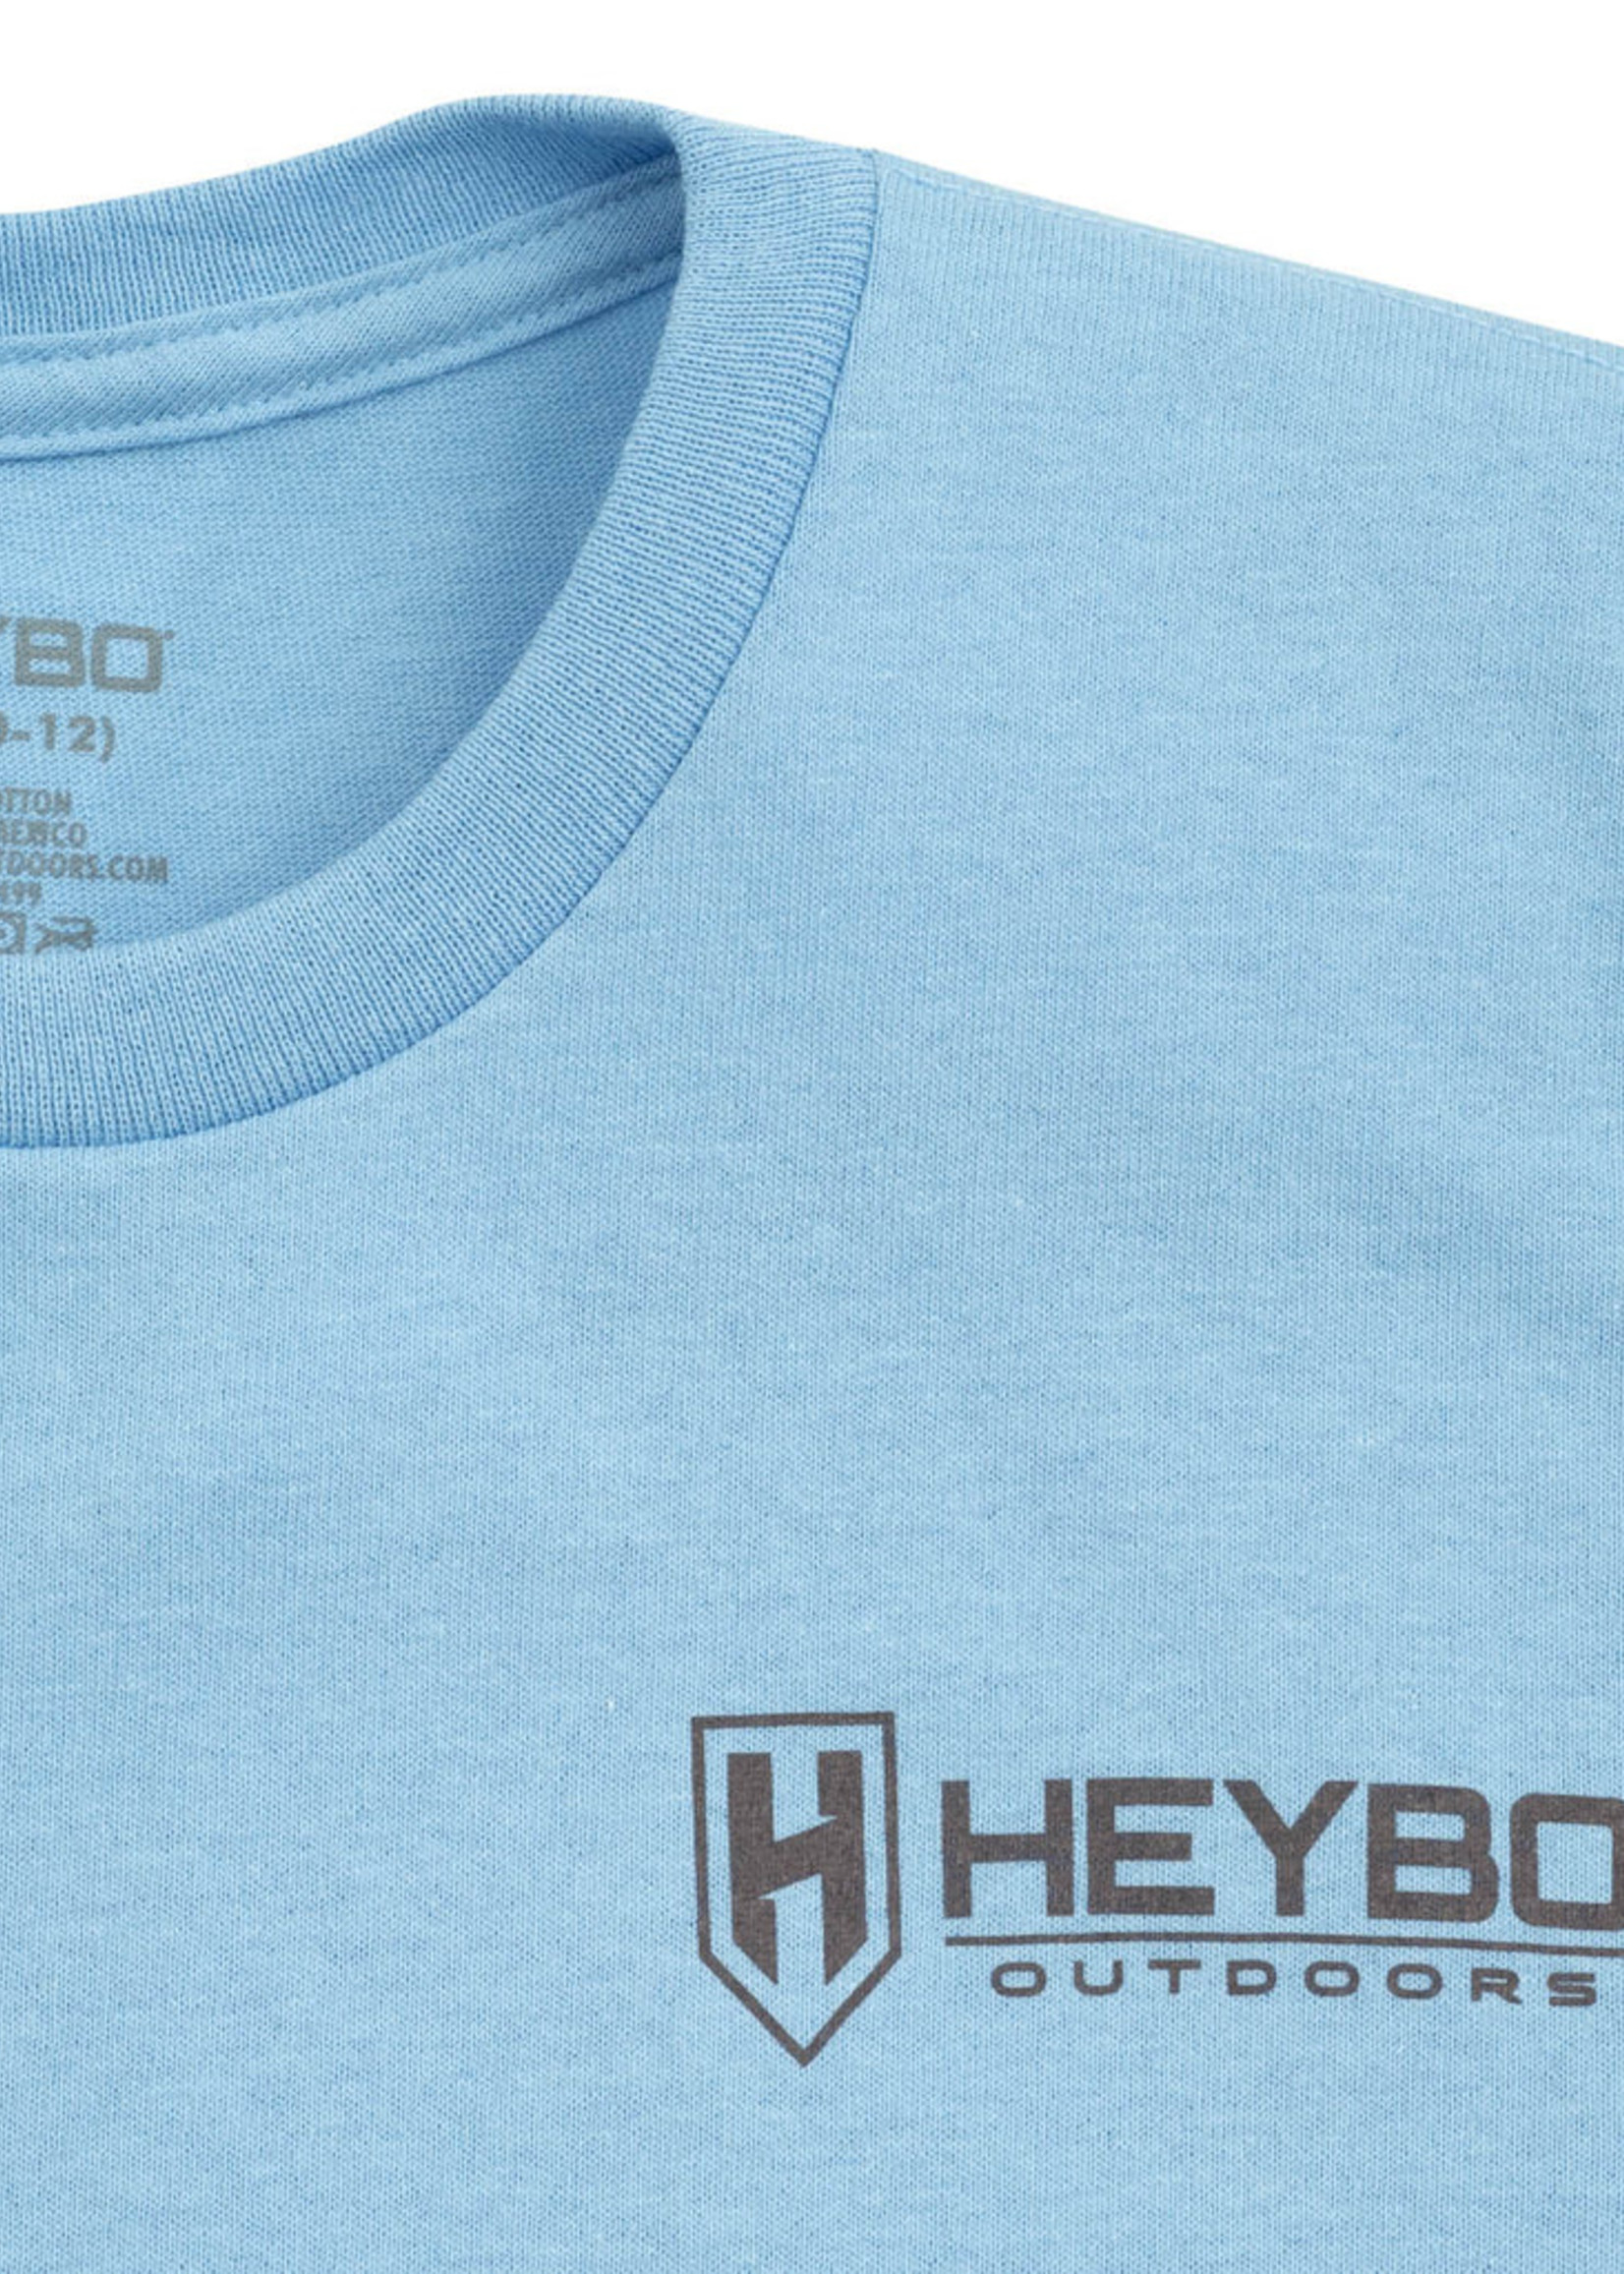 Heybo Heybo - Shotgun Sport